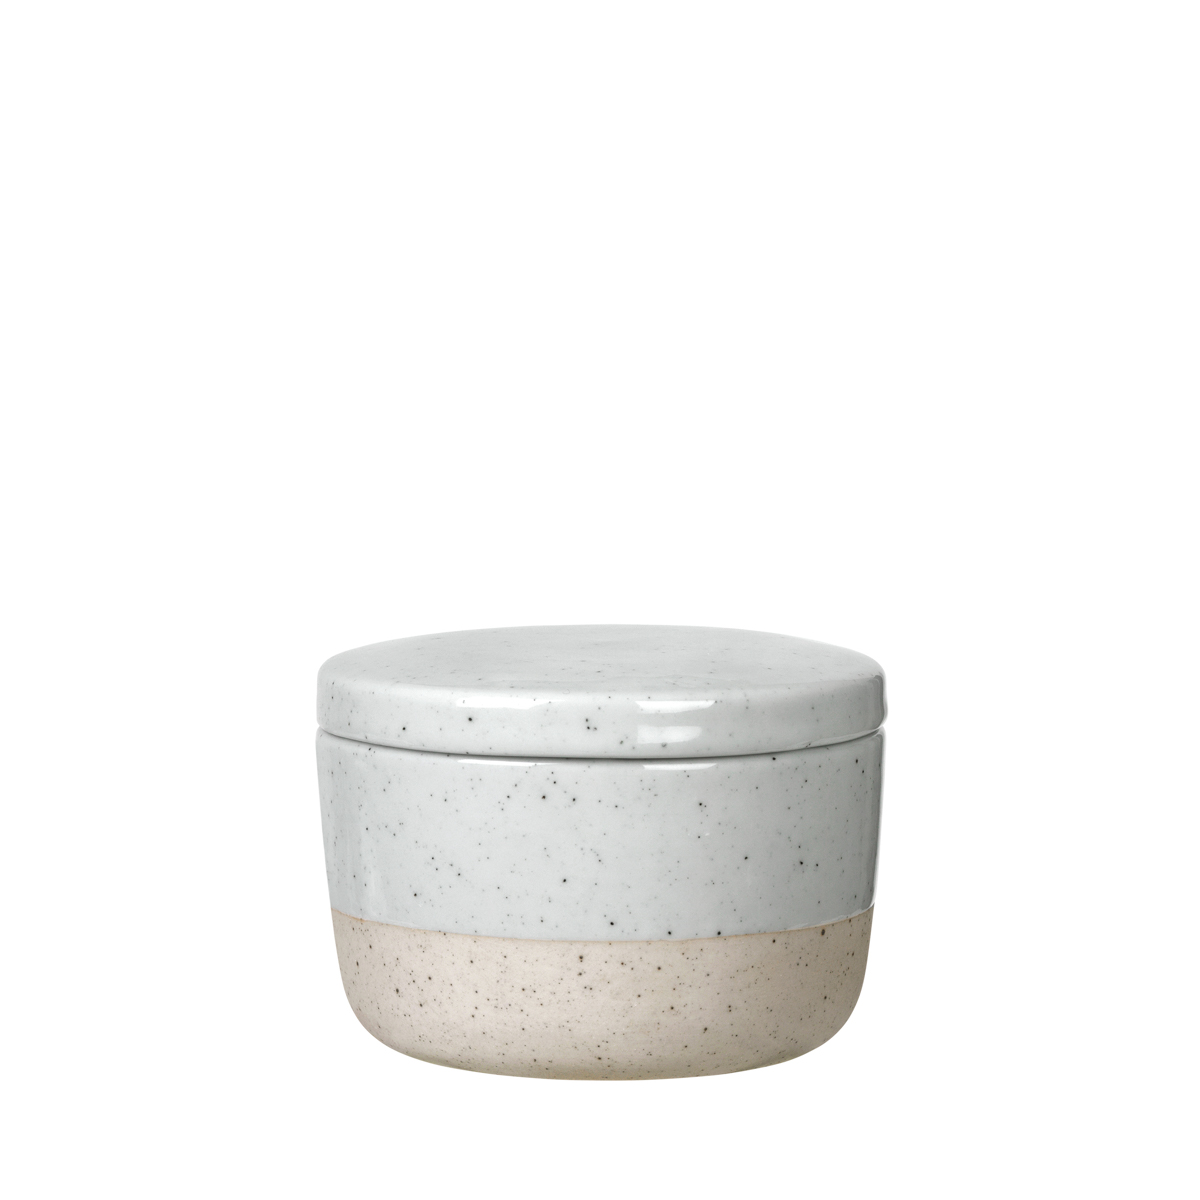 Zuckerdose -SABLO- Cloud 150 ml, Ø 8,5 cm. Material: Keramik. Von Blomus.